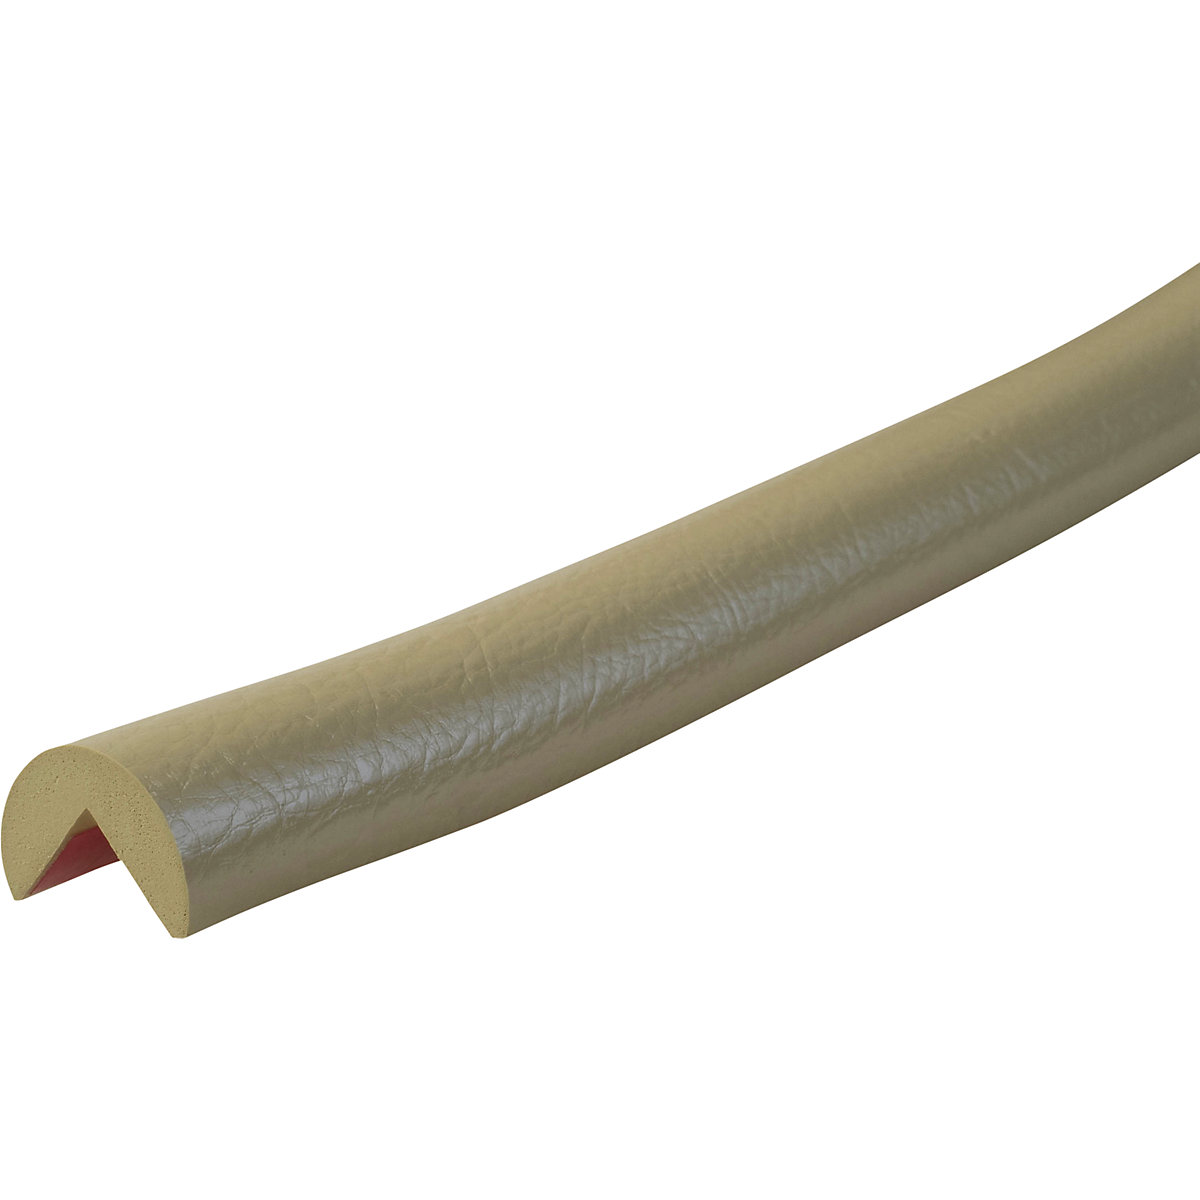 Knuffi®-hoekbescherming – SHG, type A, stuk van 1 m, beige-31